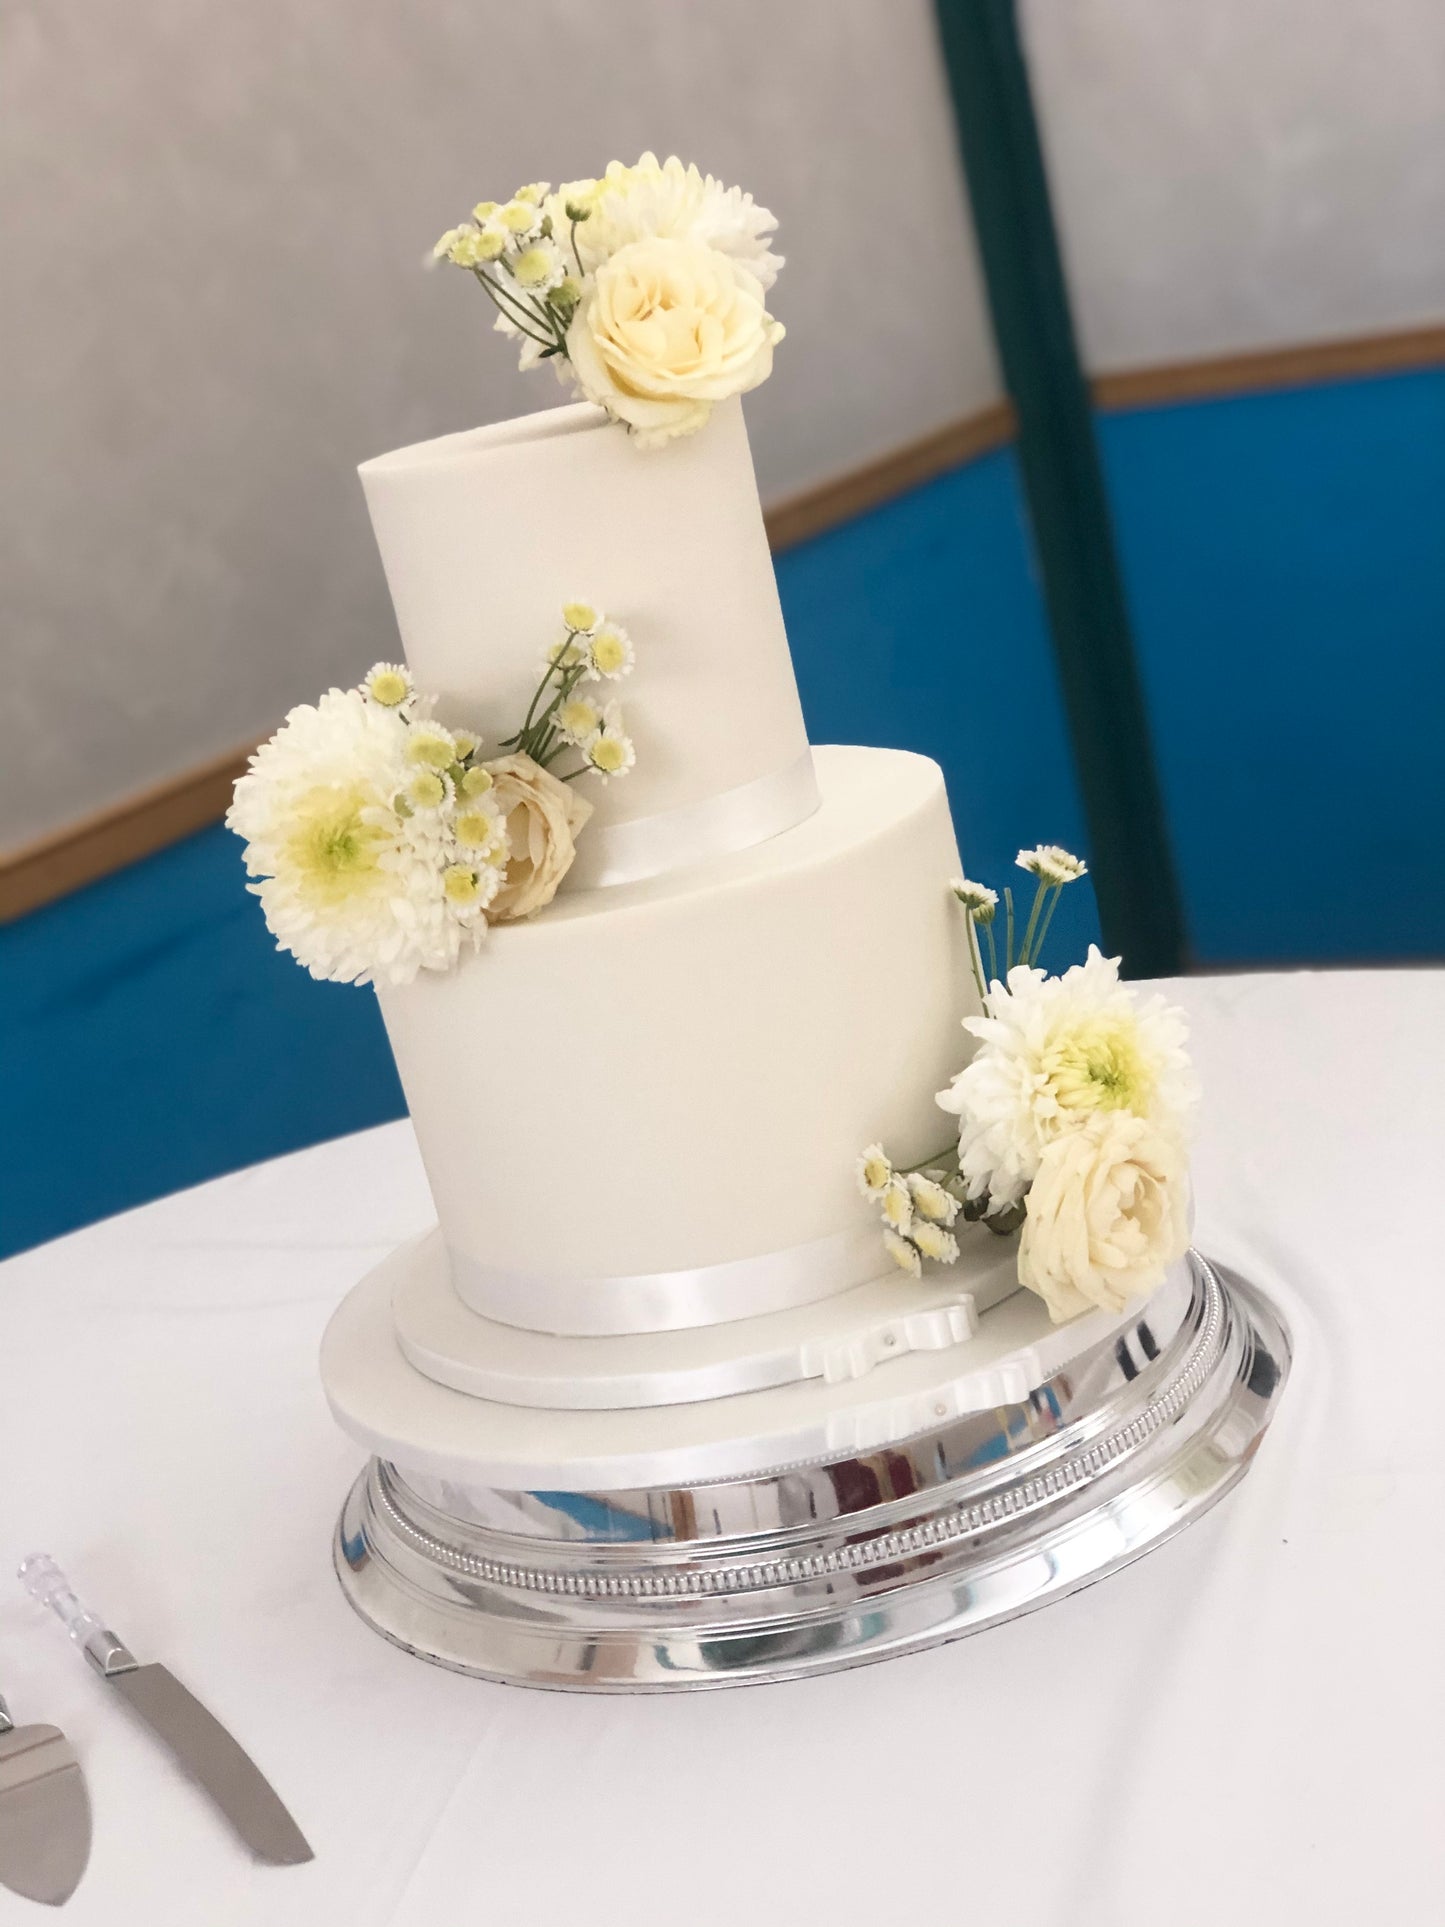 Two-tier fondant wedding cake